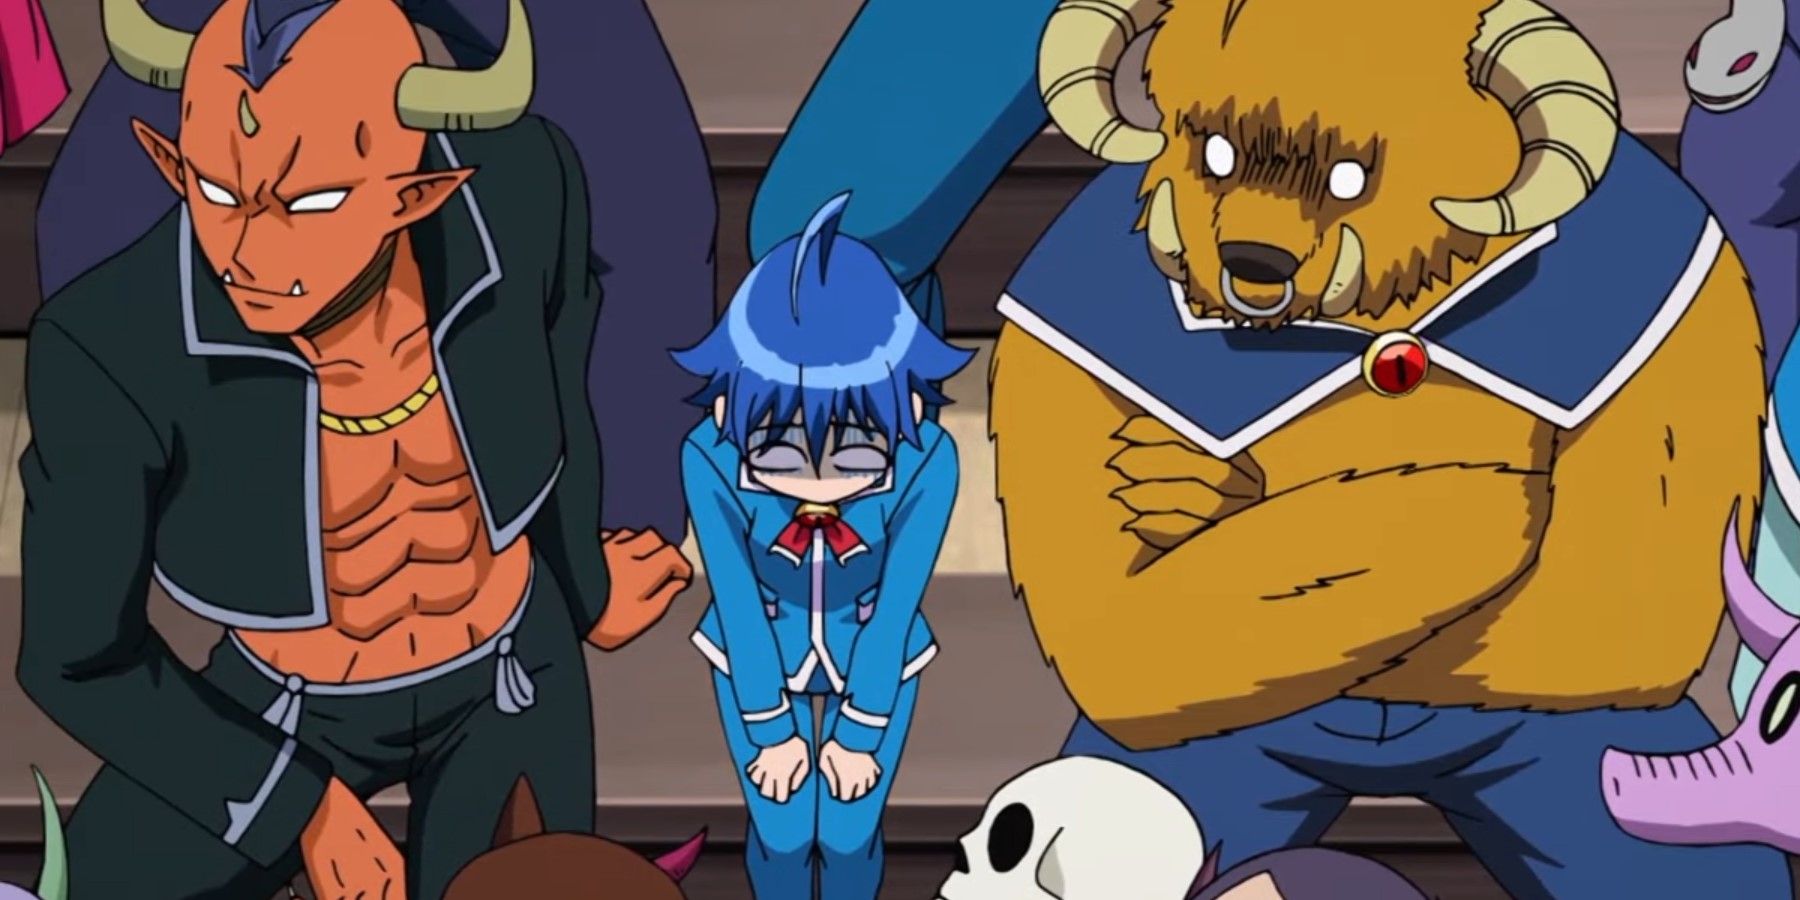 Iruma-kun Iruma at demon school surrounded by demons